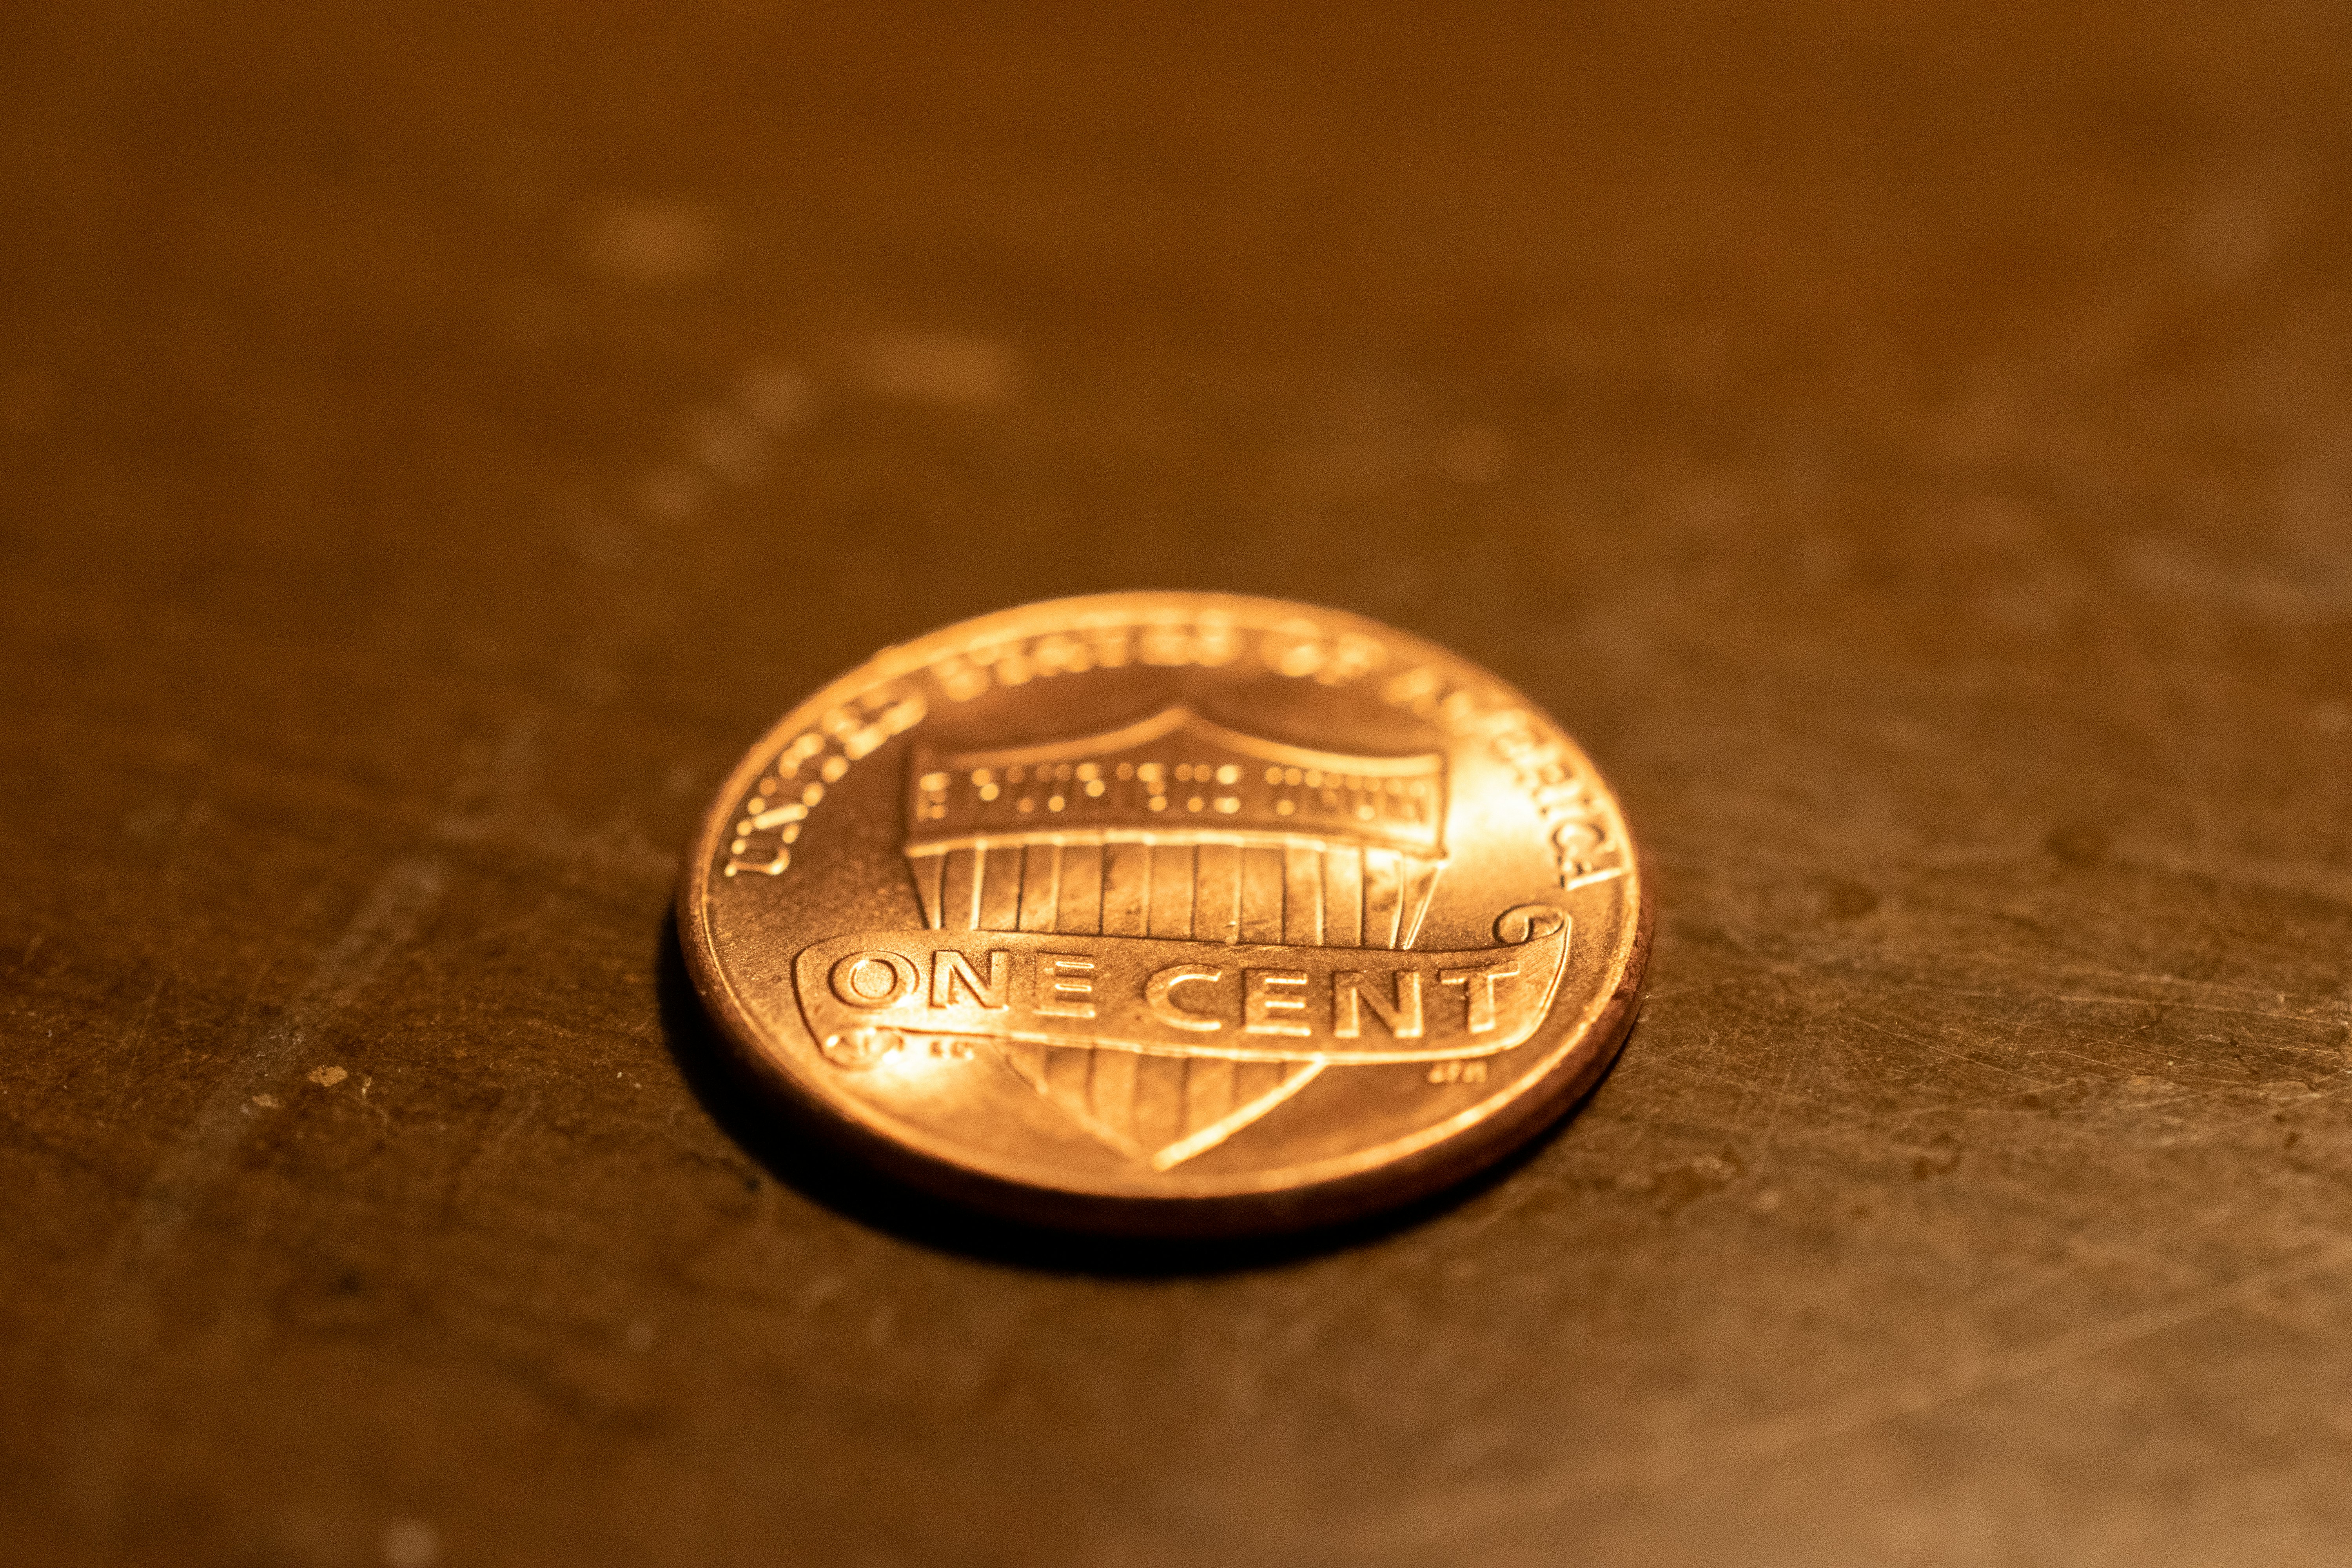 Back of a union shield penny.